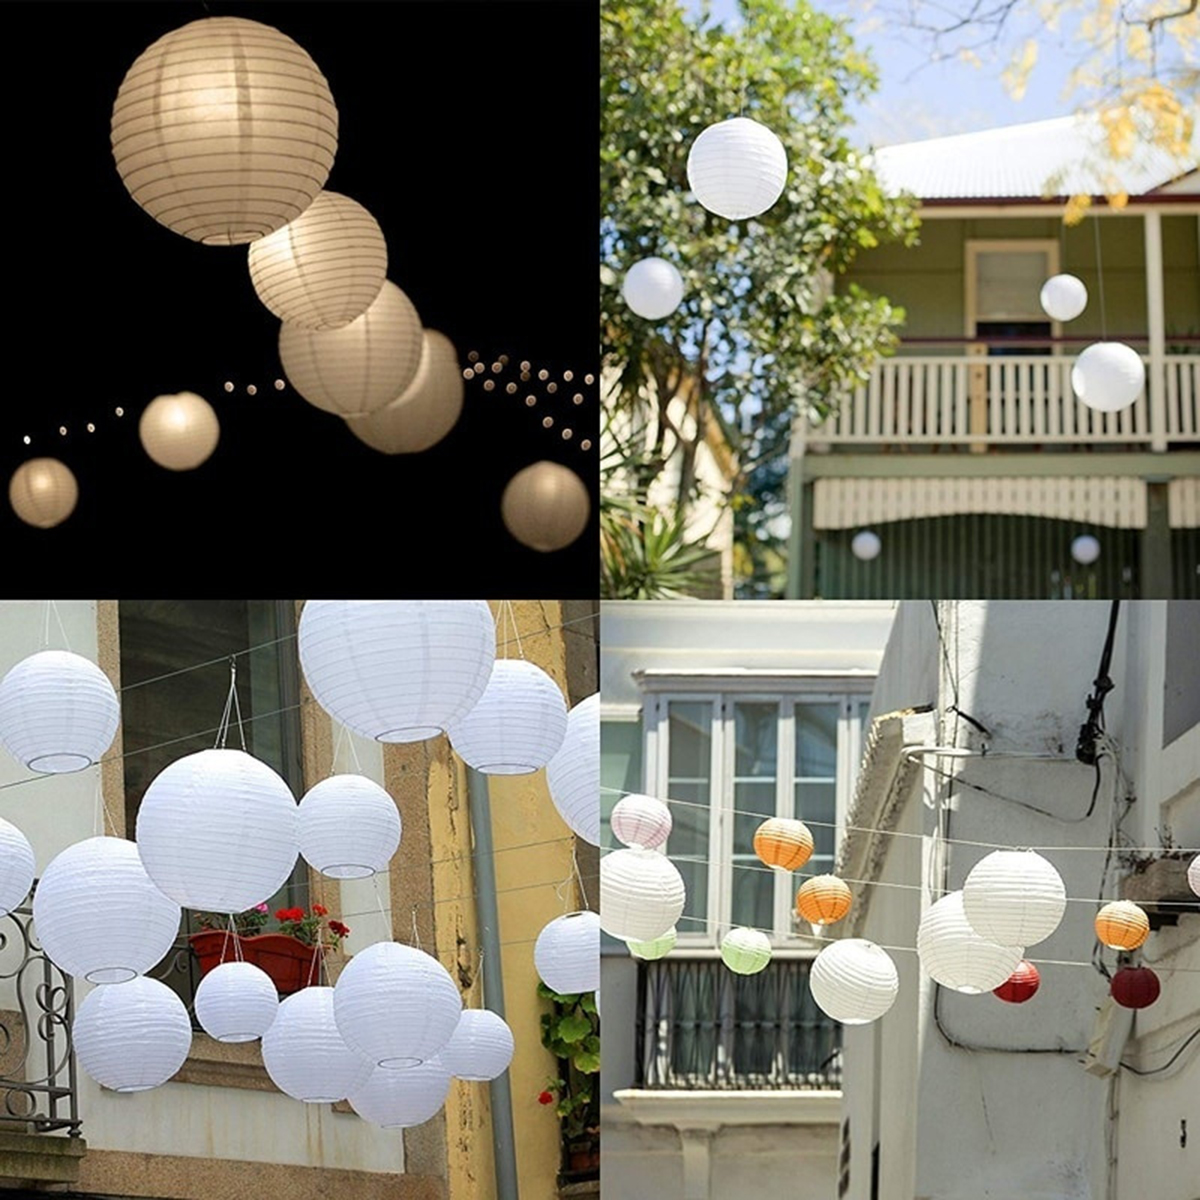 3PCS-White-Round-Paper-Lanterns-Chinese-Hanging-Decorations-Decorative-Lanterns-for-Wedding-Party-De-1634891-5